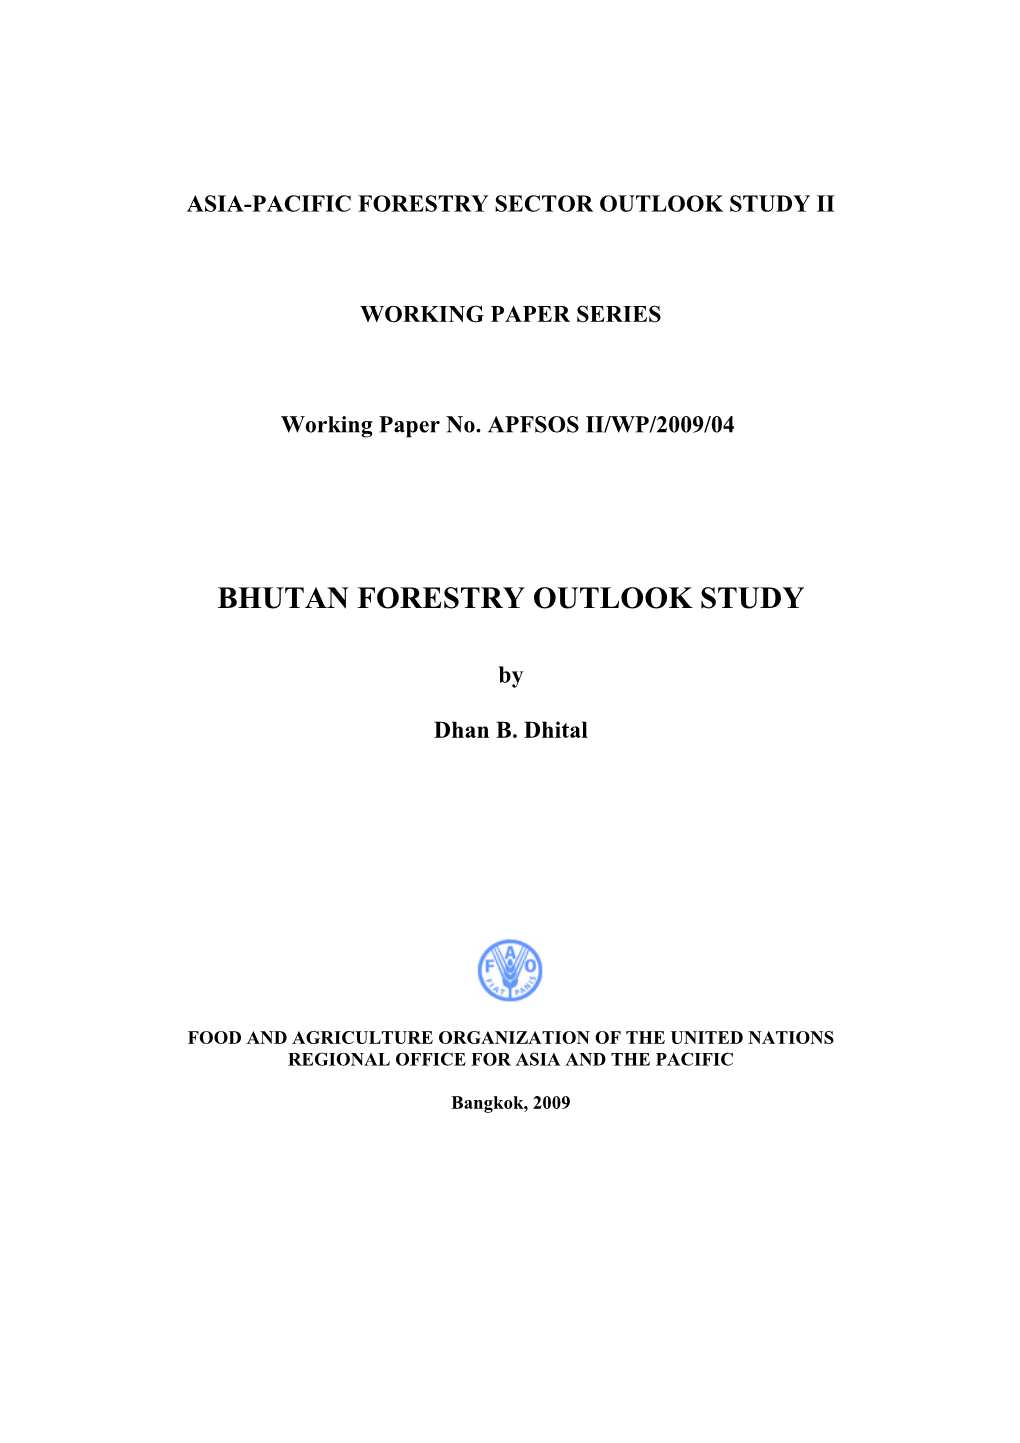 Bhutan Forestry Outlook Study